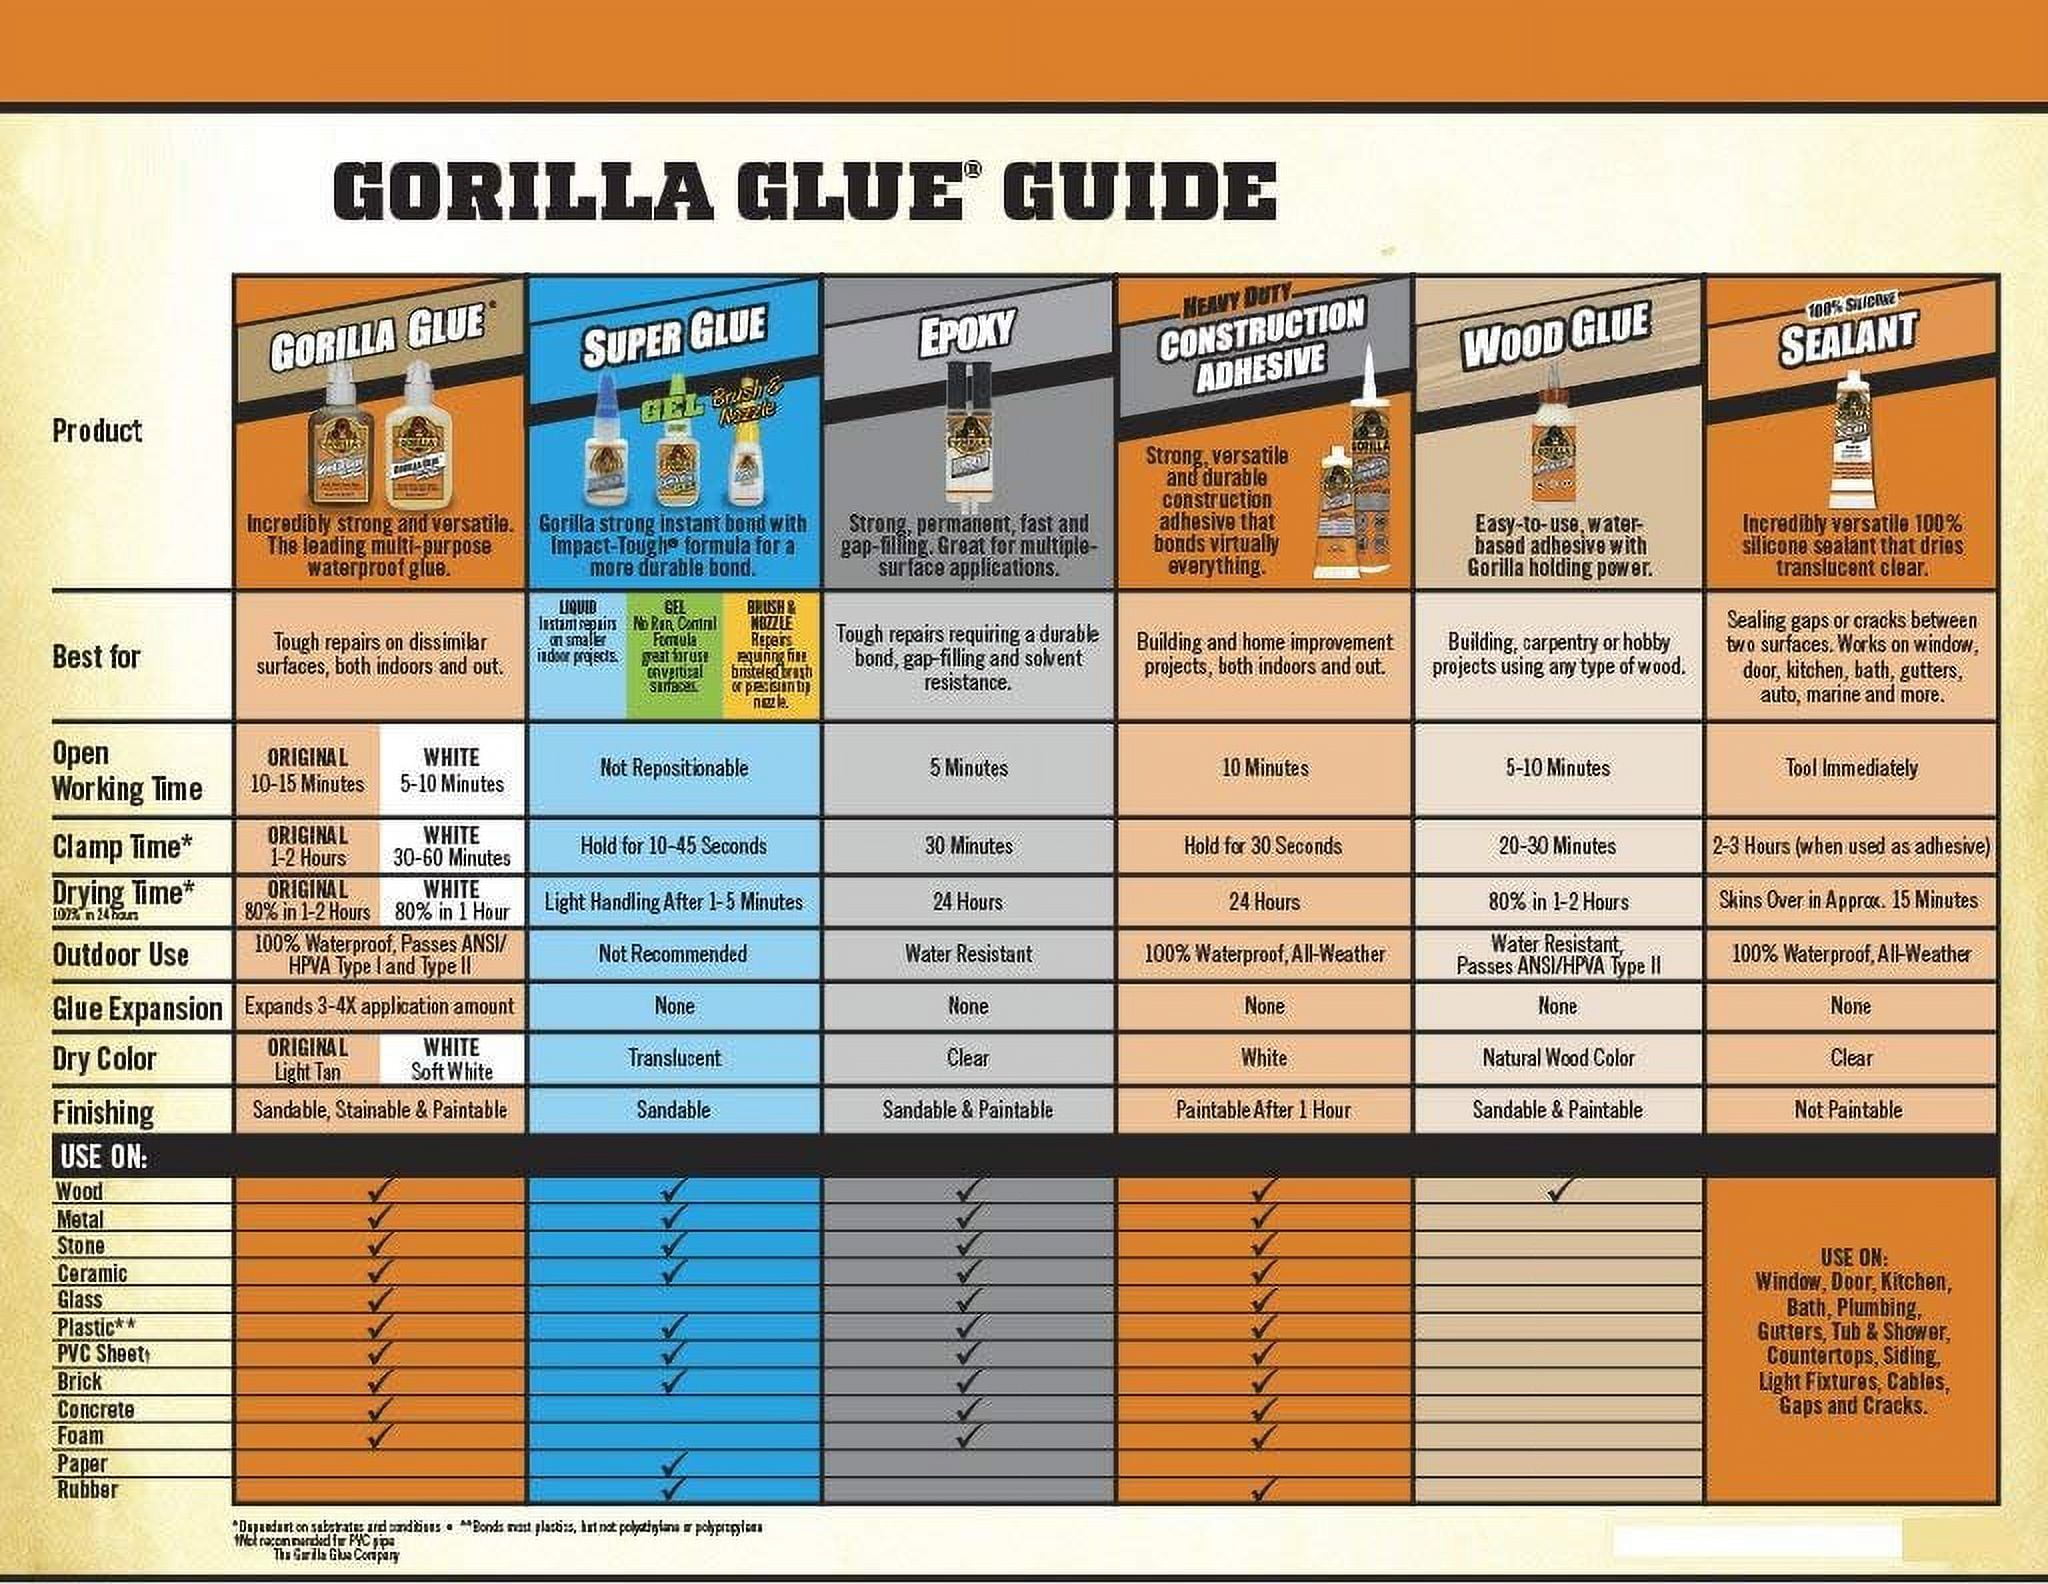 Gorilla Gallon Wood Glue 6231501, Gallon - Smith's Food and Drug